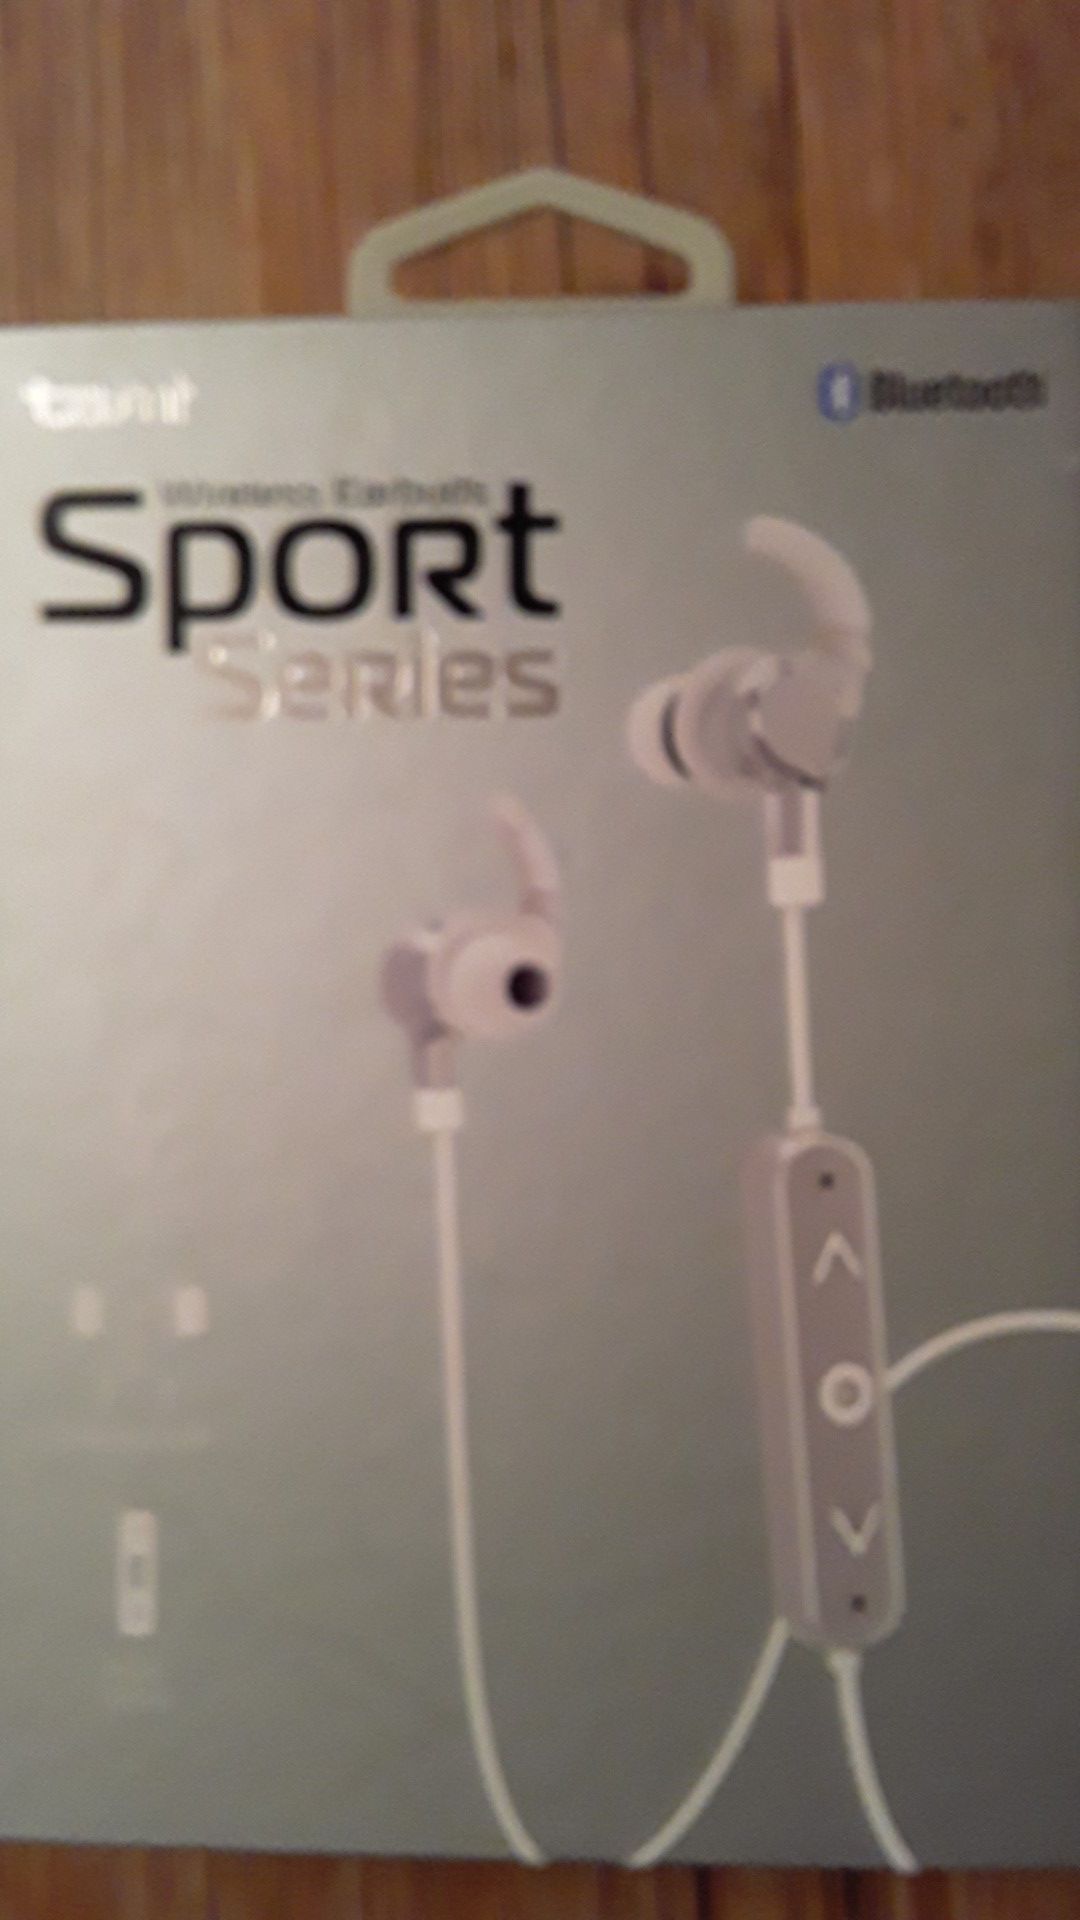 Tzumi wireless earbuds Sports series